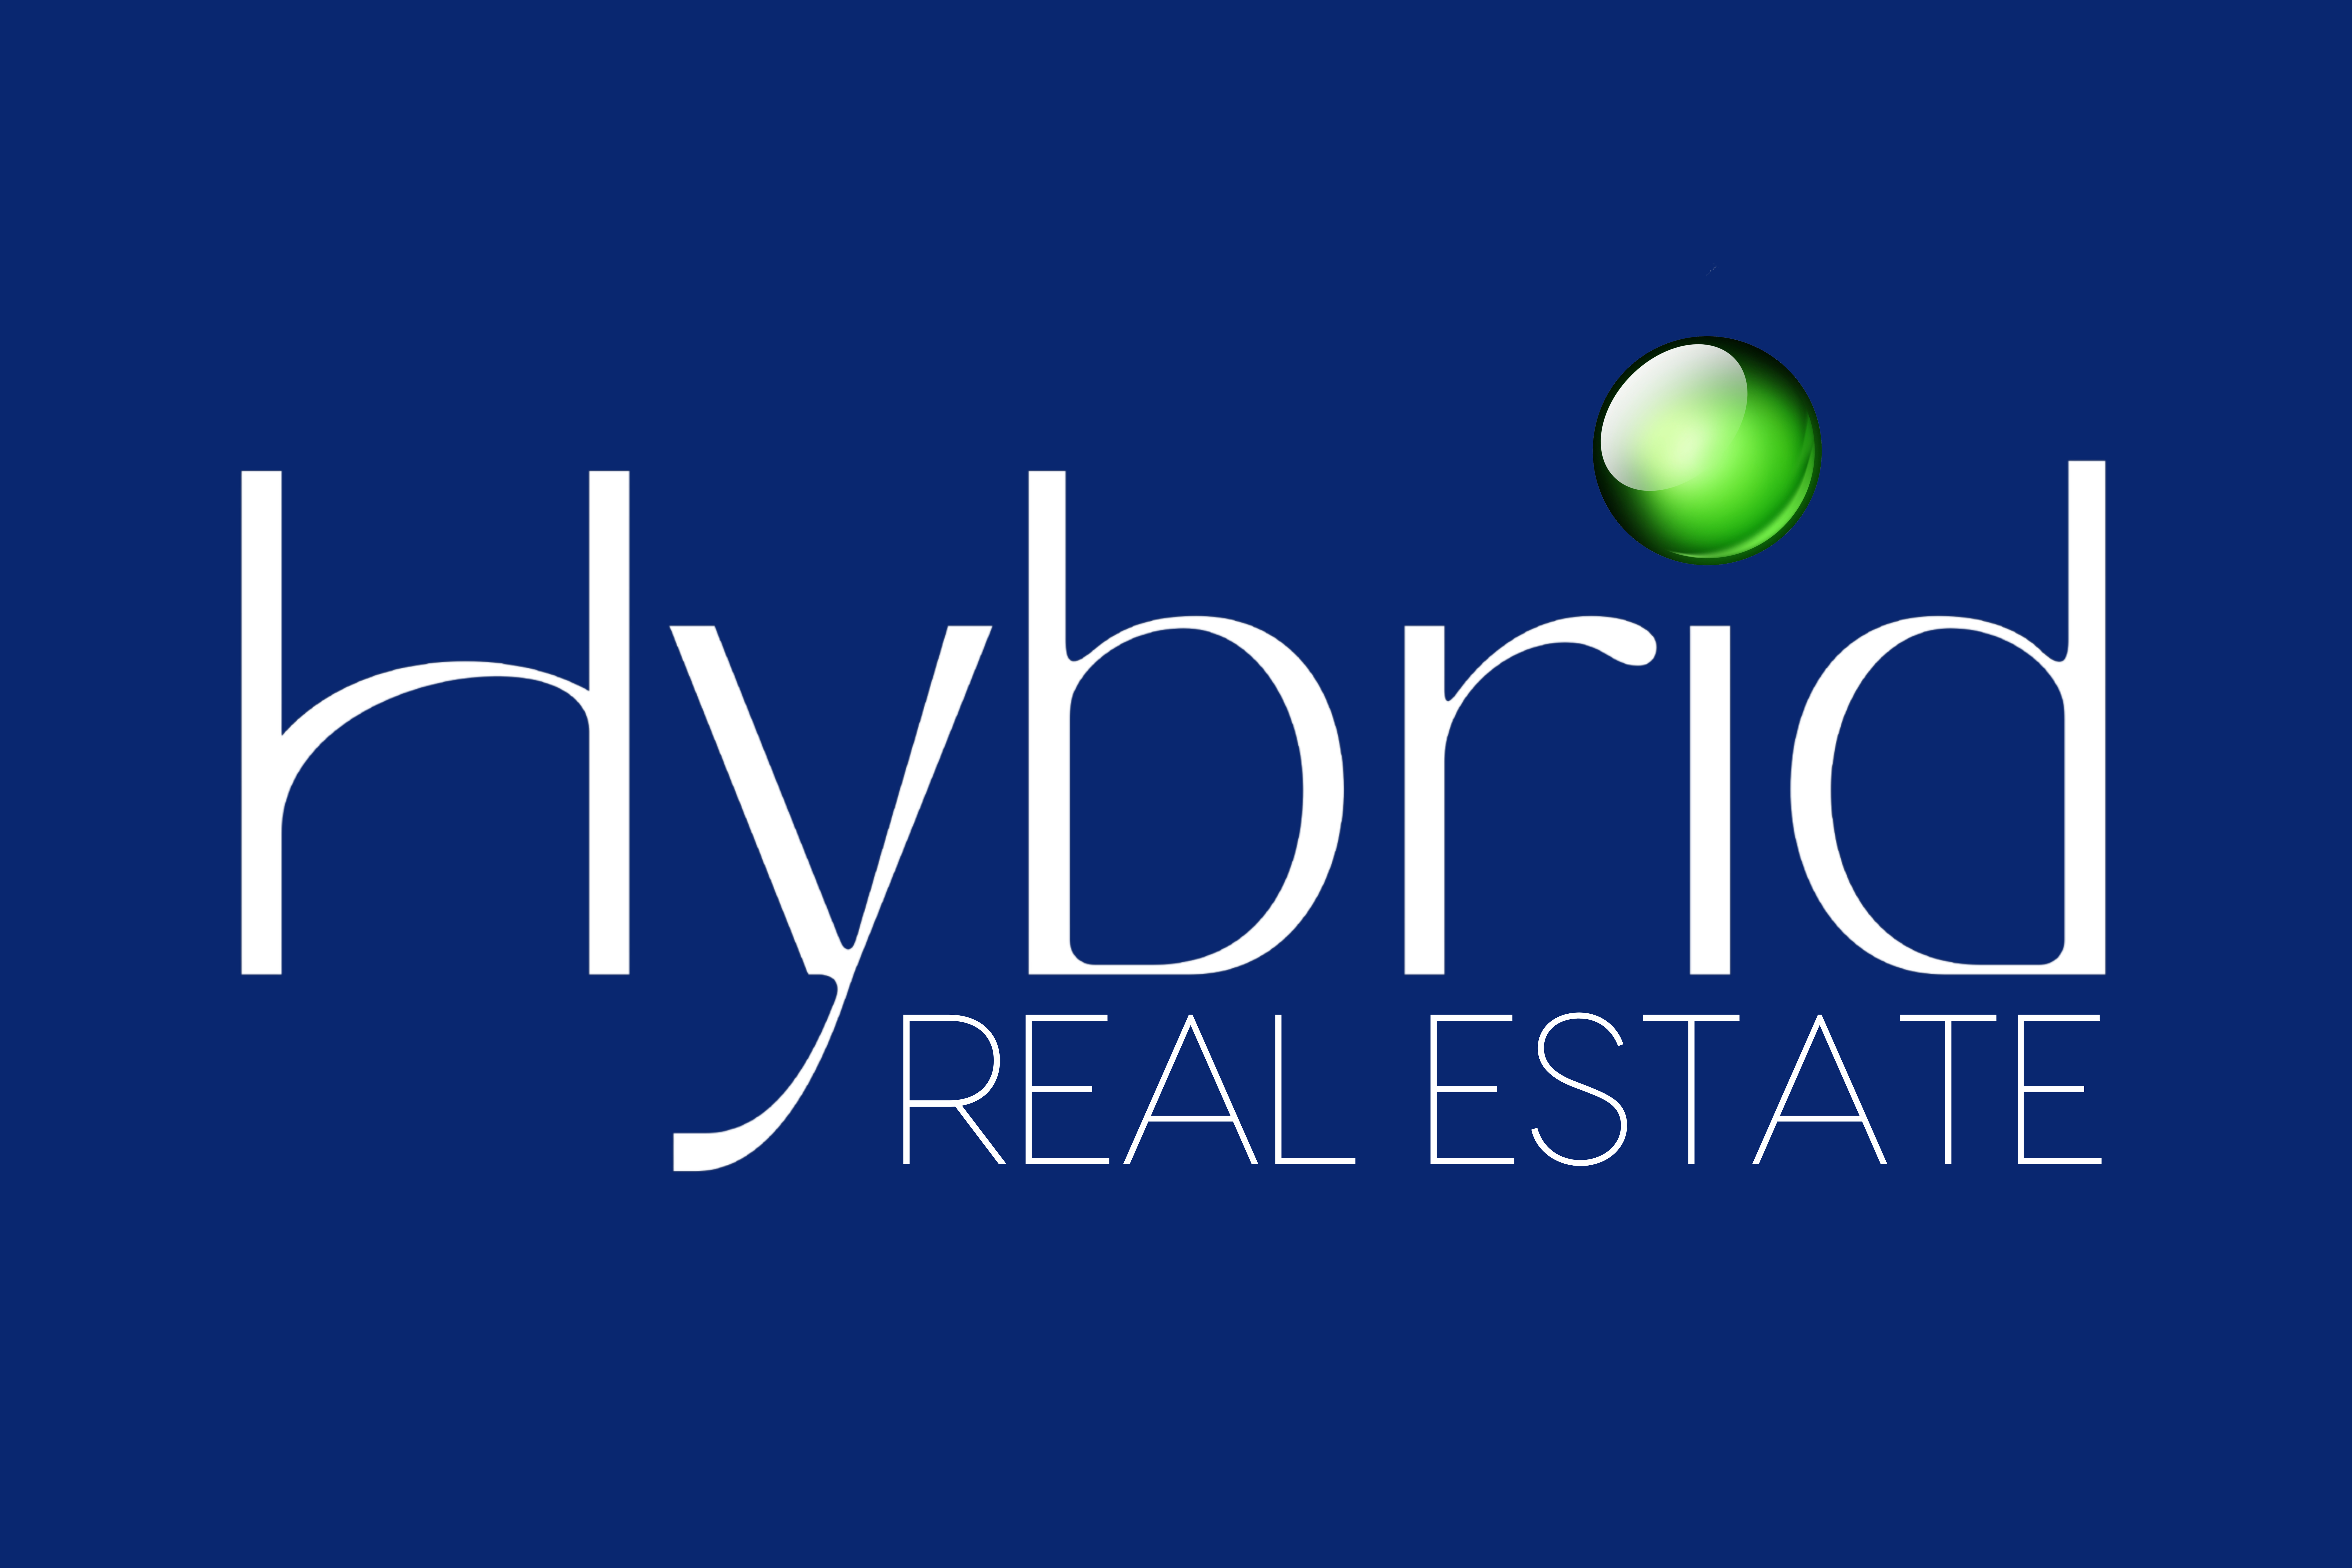 Hybrid Real Estate